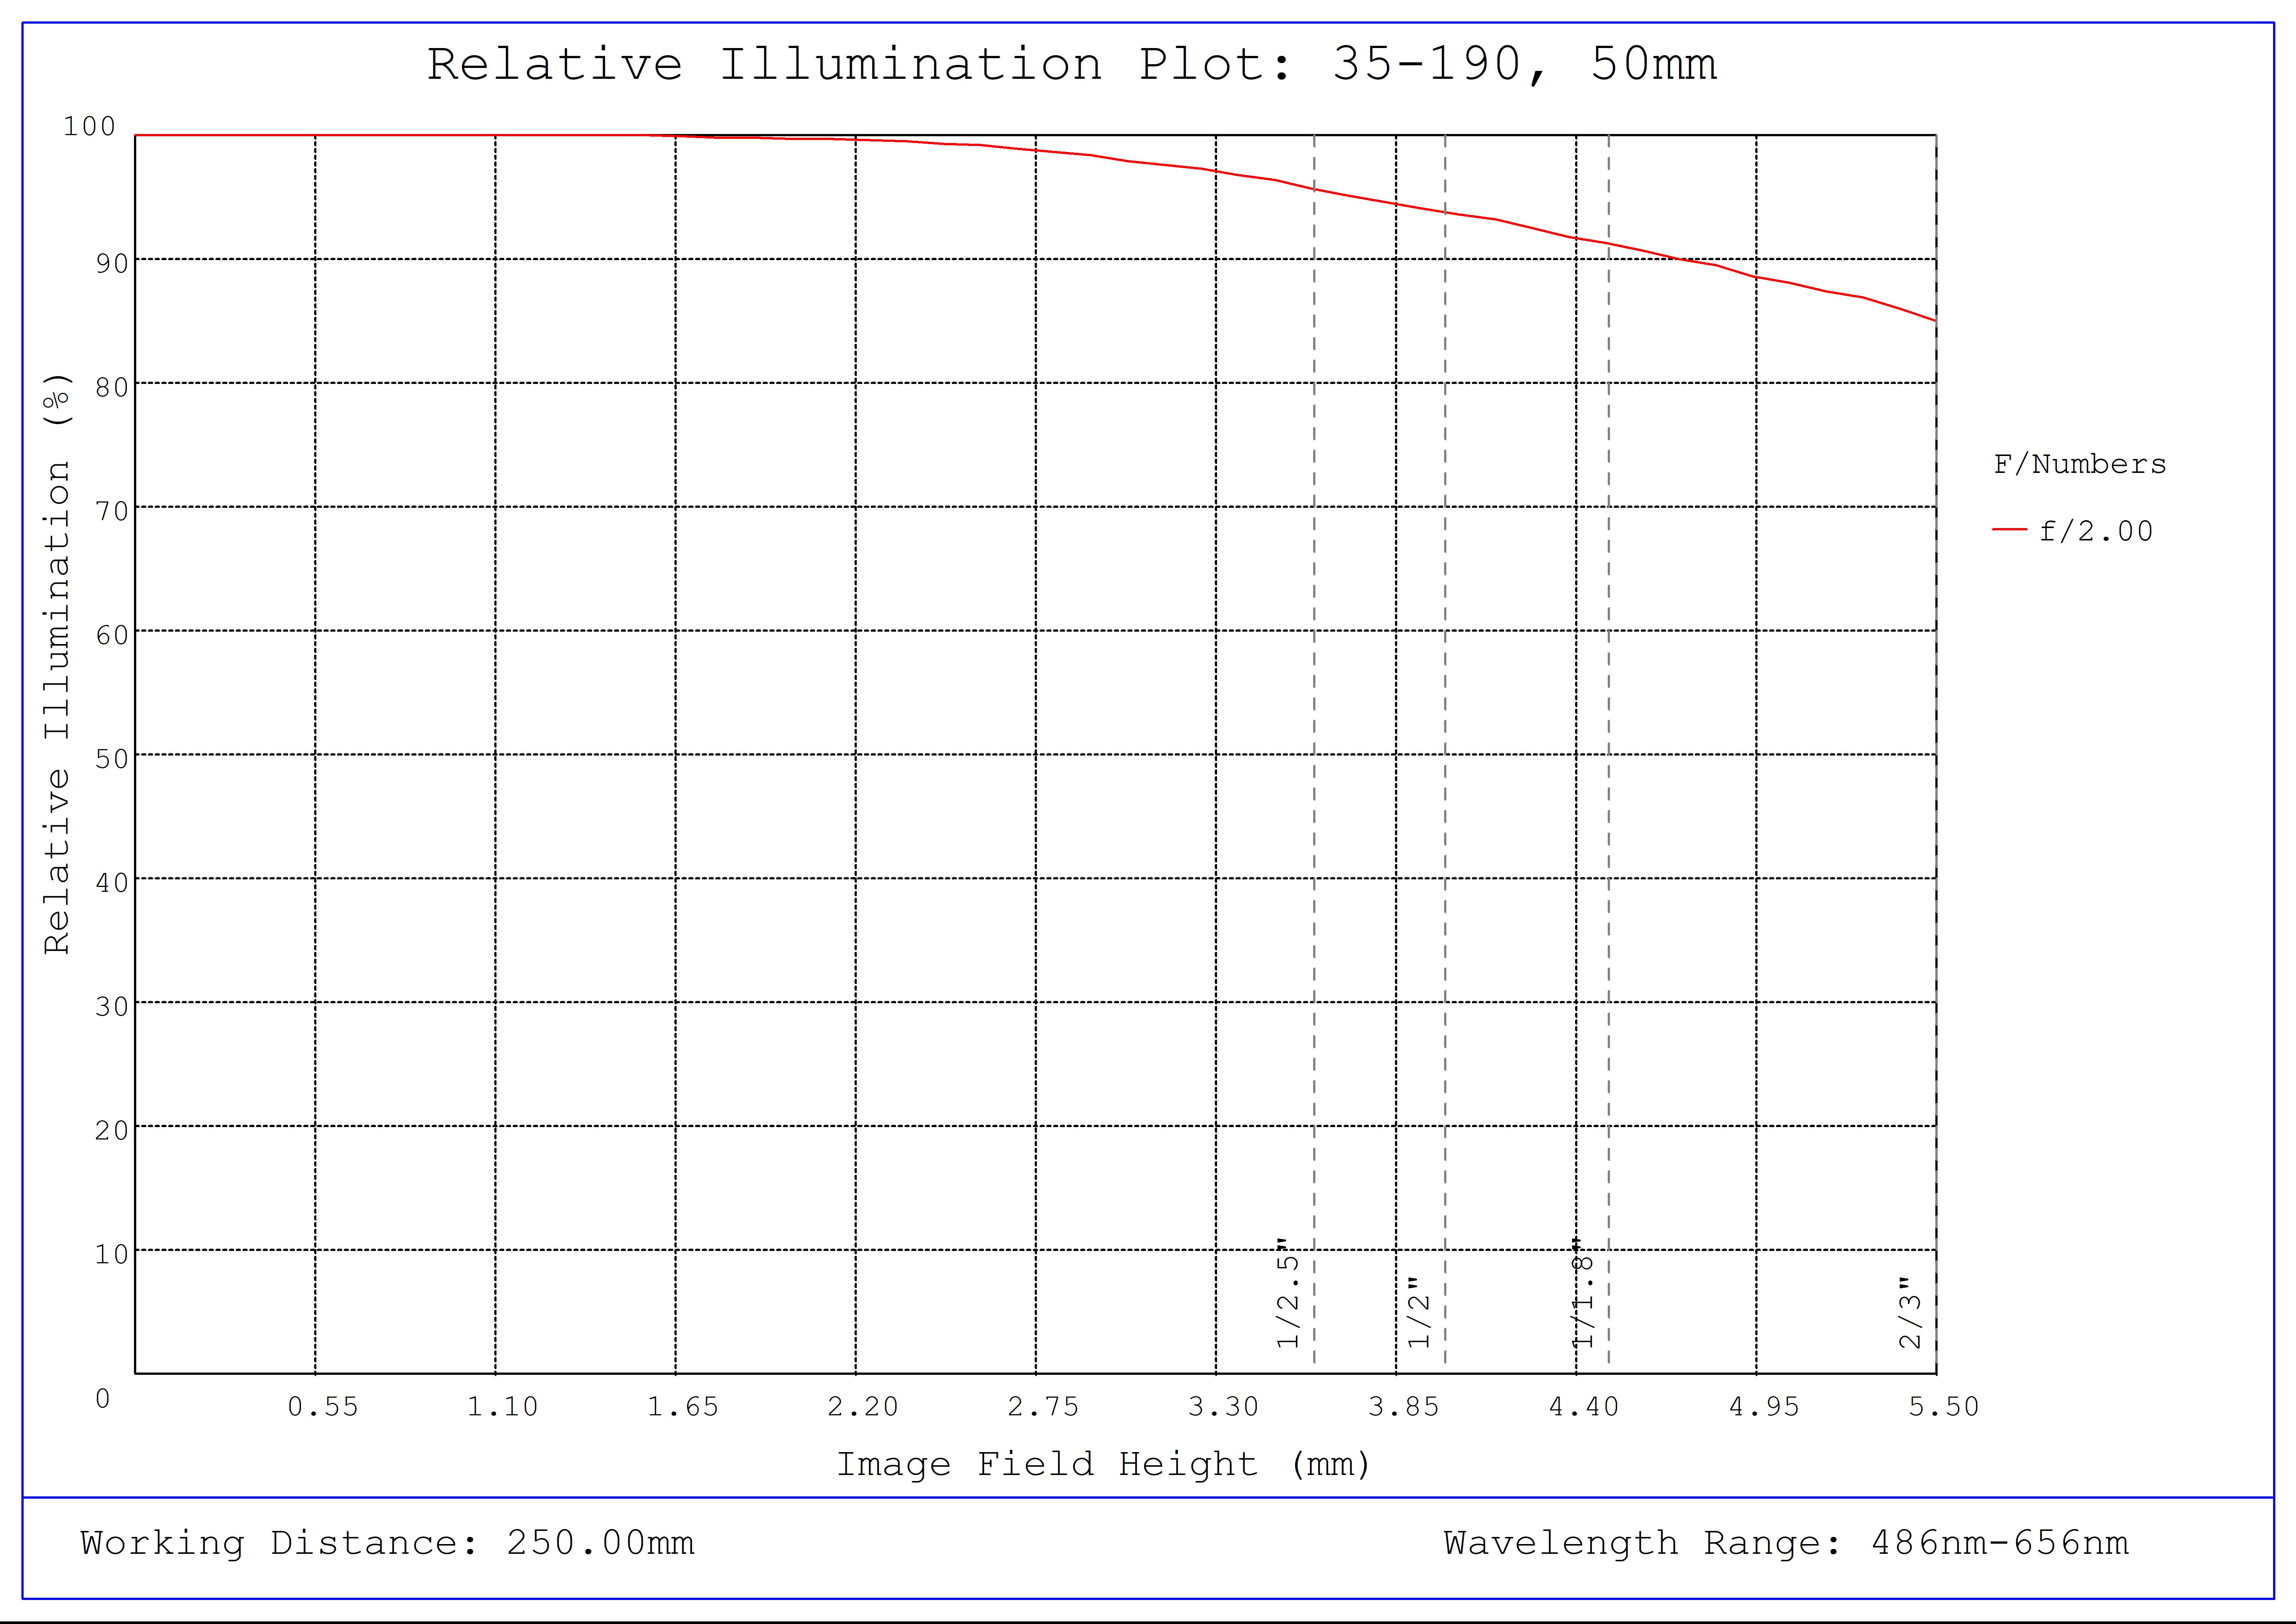 #35-190, 50mm, f/2.0 Cr Series Fixed Focal Length Lens, Relative Illumination Plot